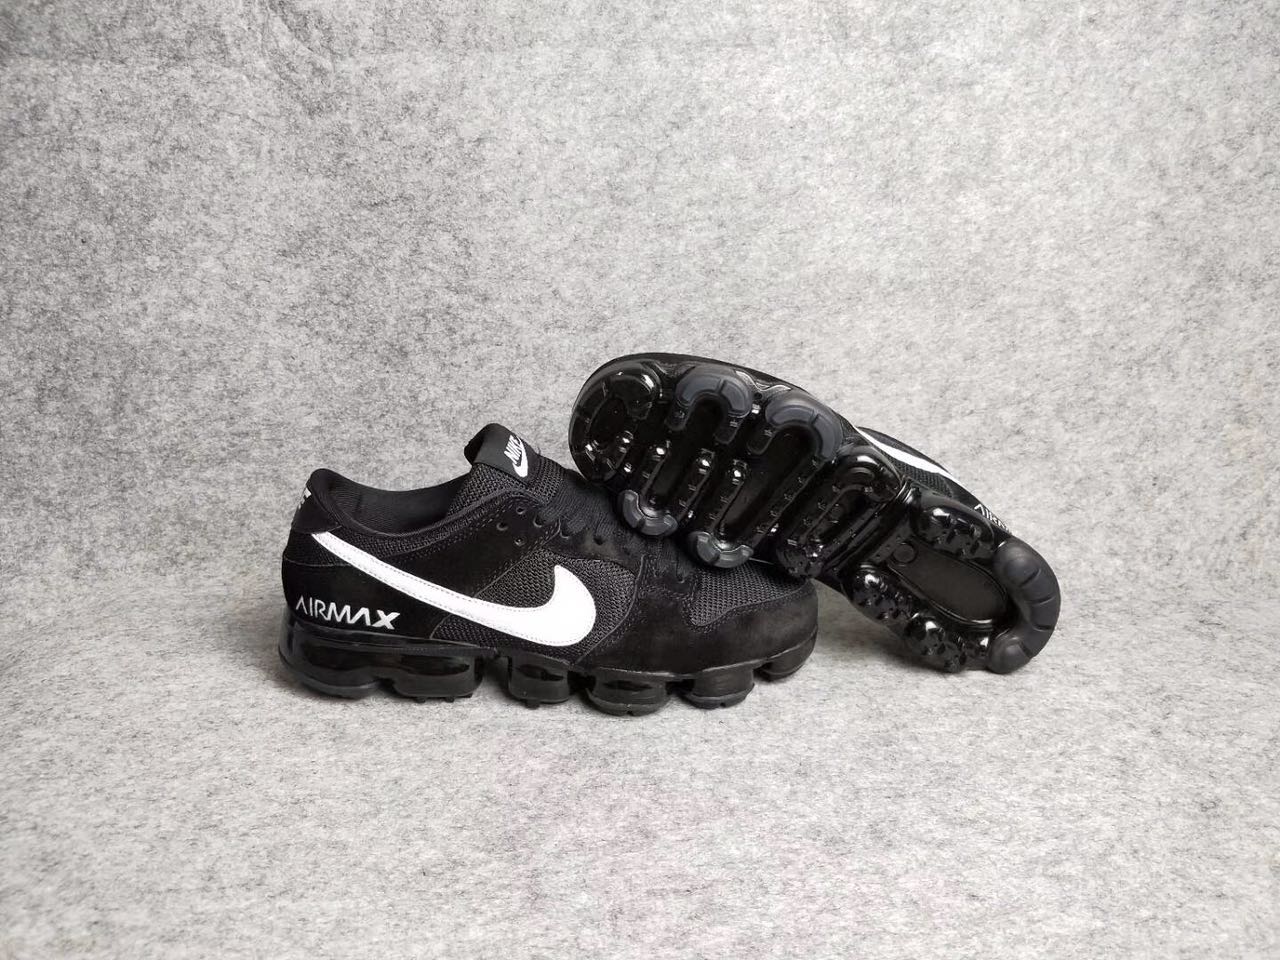 New Nike Air Max 2018 Black White Shoes